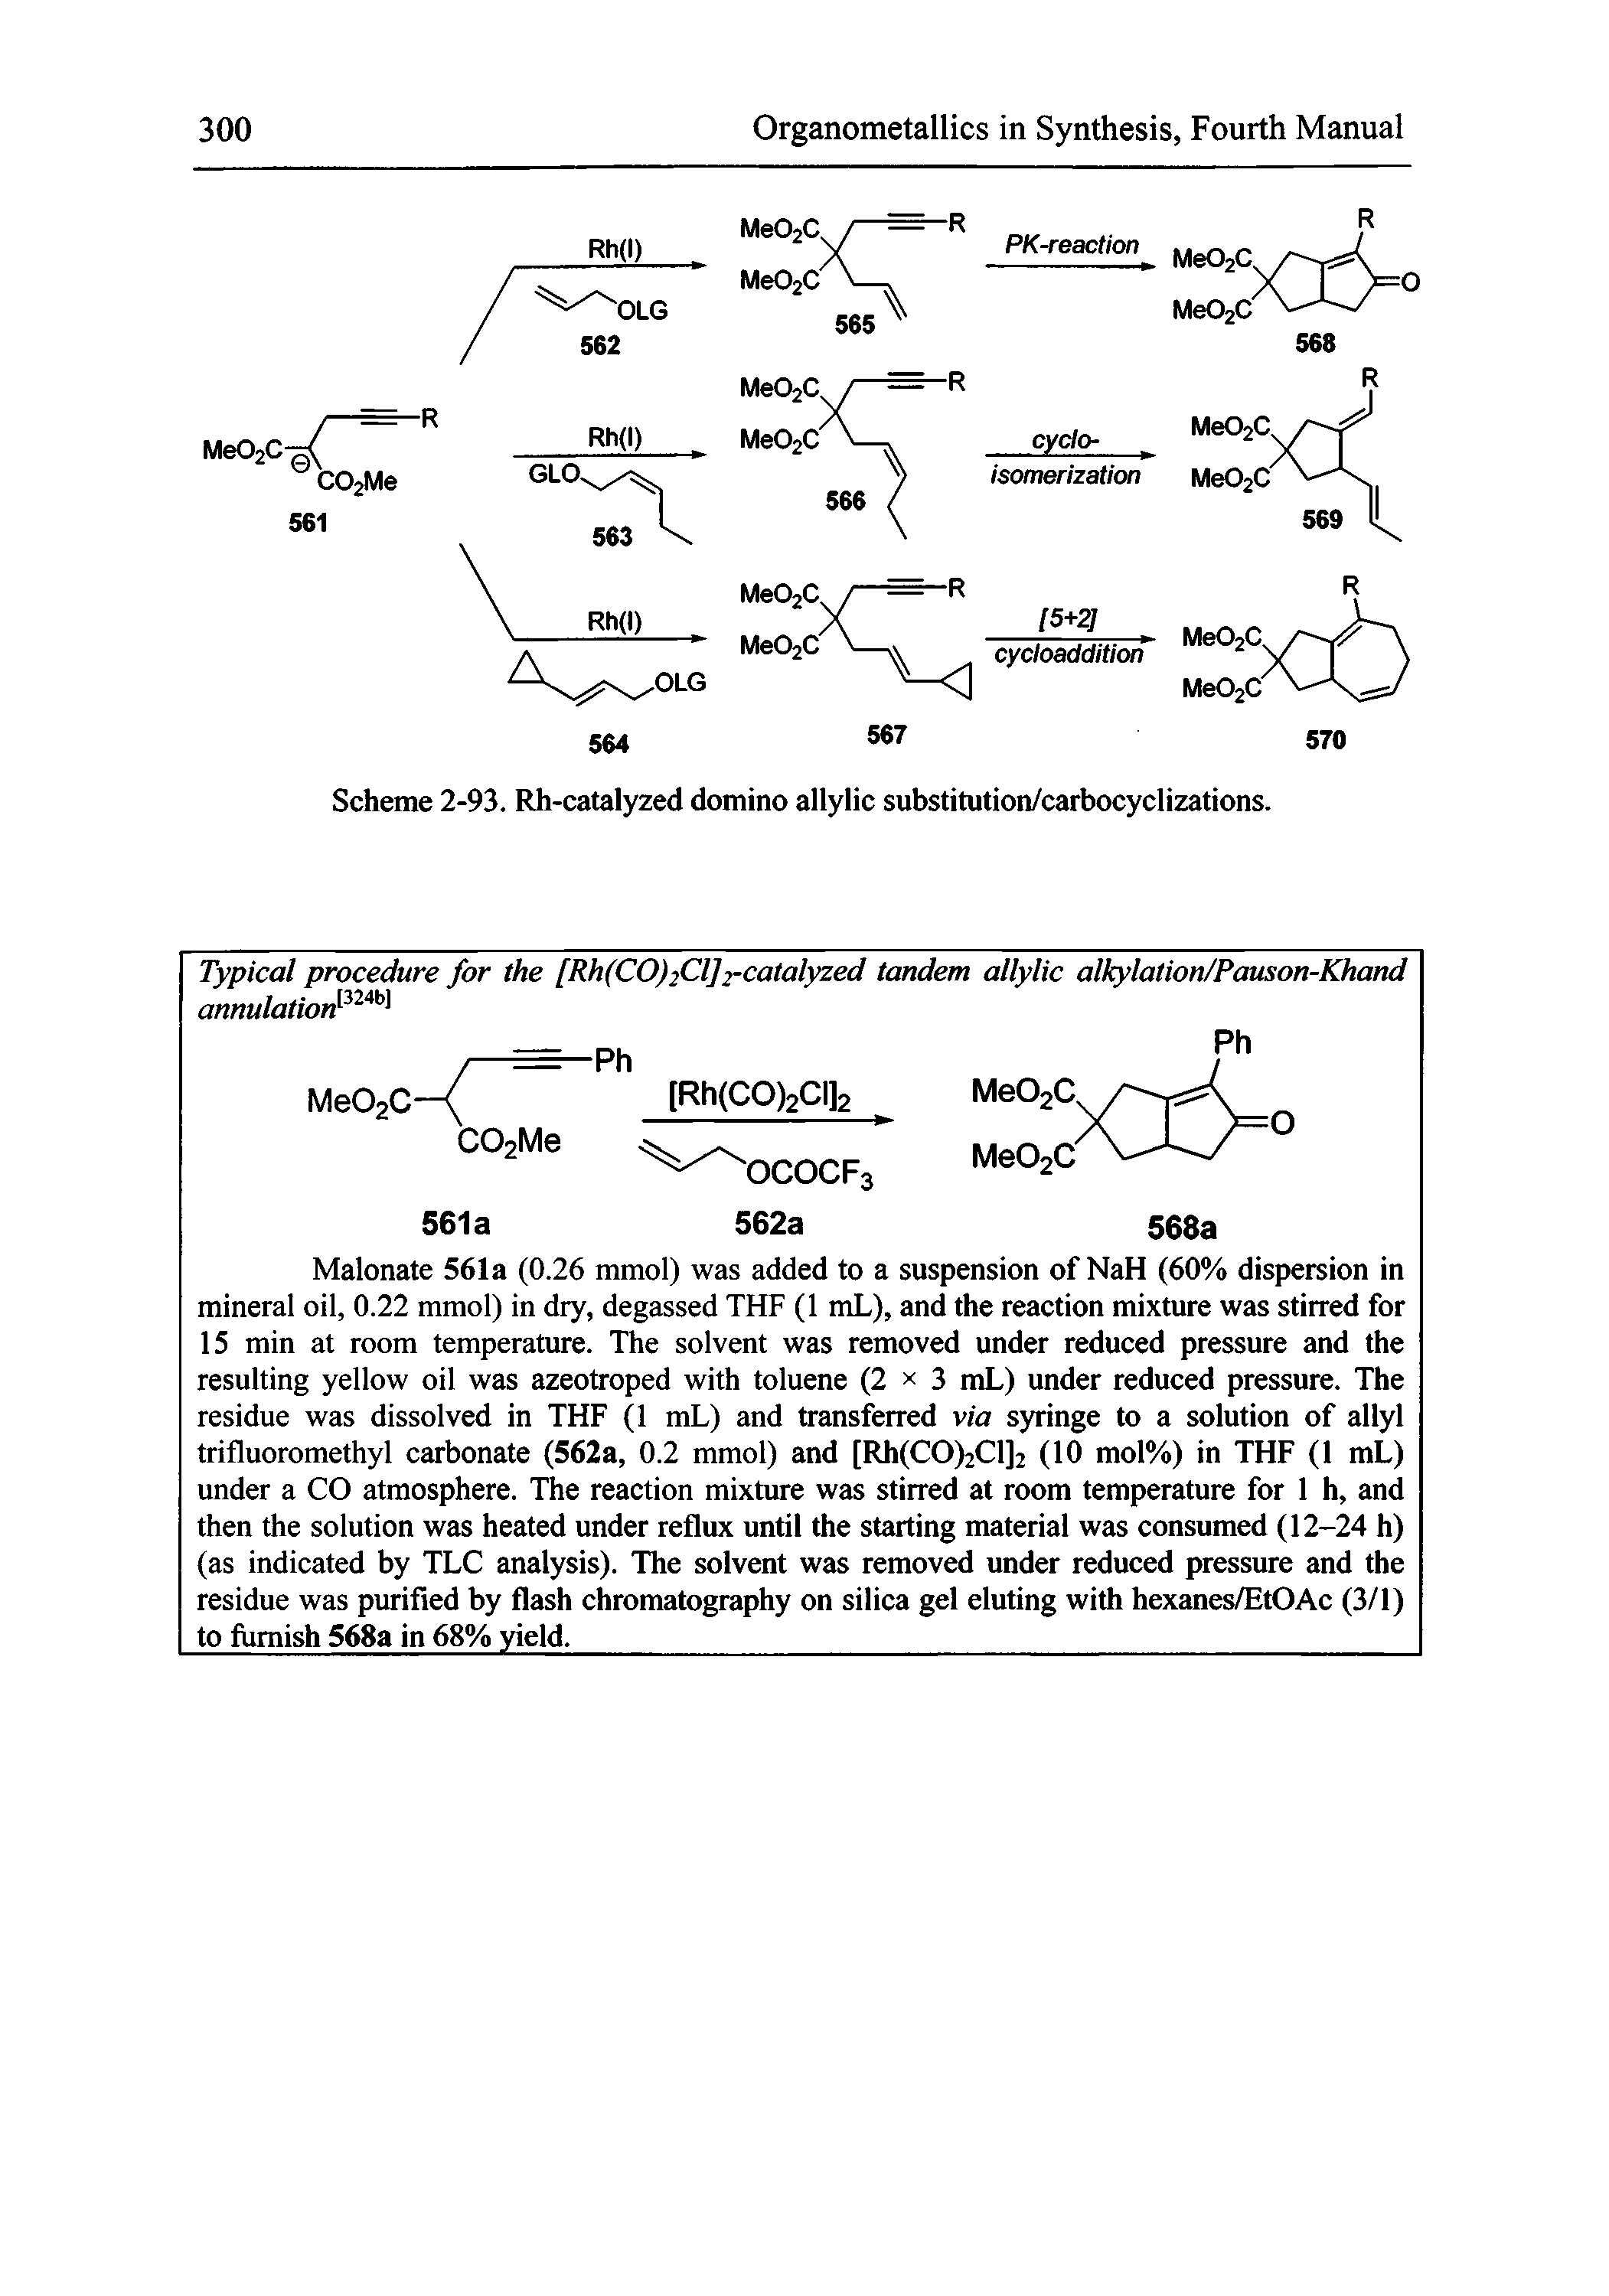 Scheme 2-93. Rh-eatalyzed domino allylic substitution/carbocyclizations.